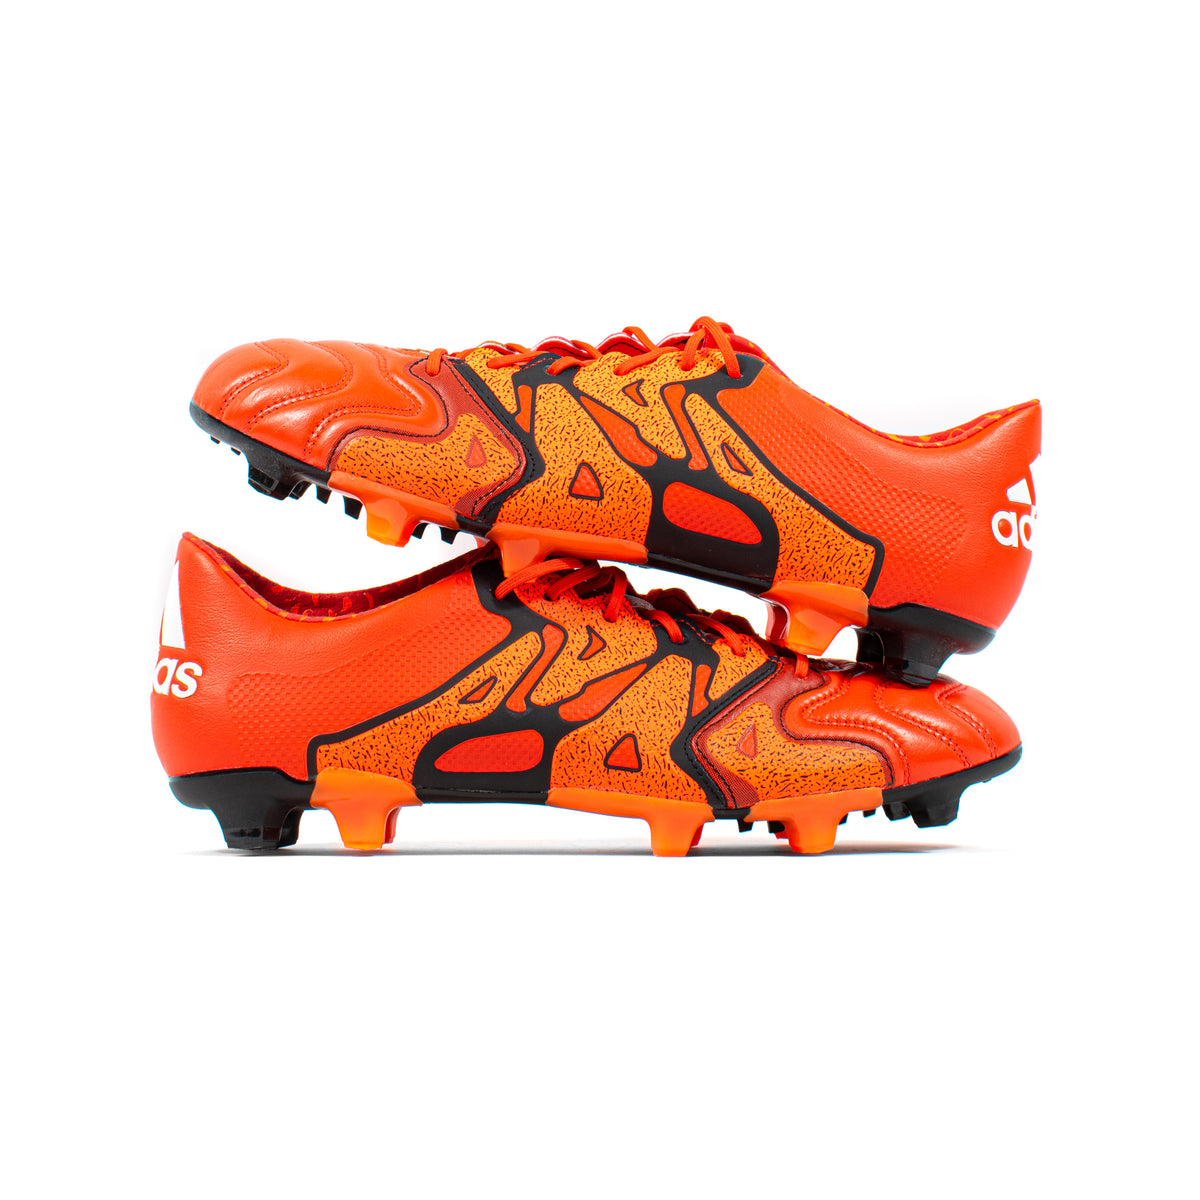 udrydde enkemand Min Adidas X 15.1 Orange Leather FG – Classic Soccer Cleats